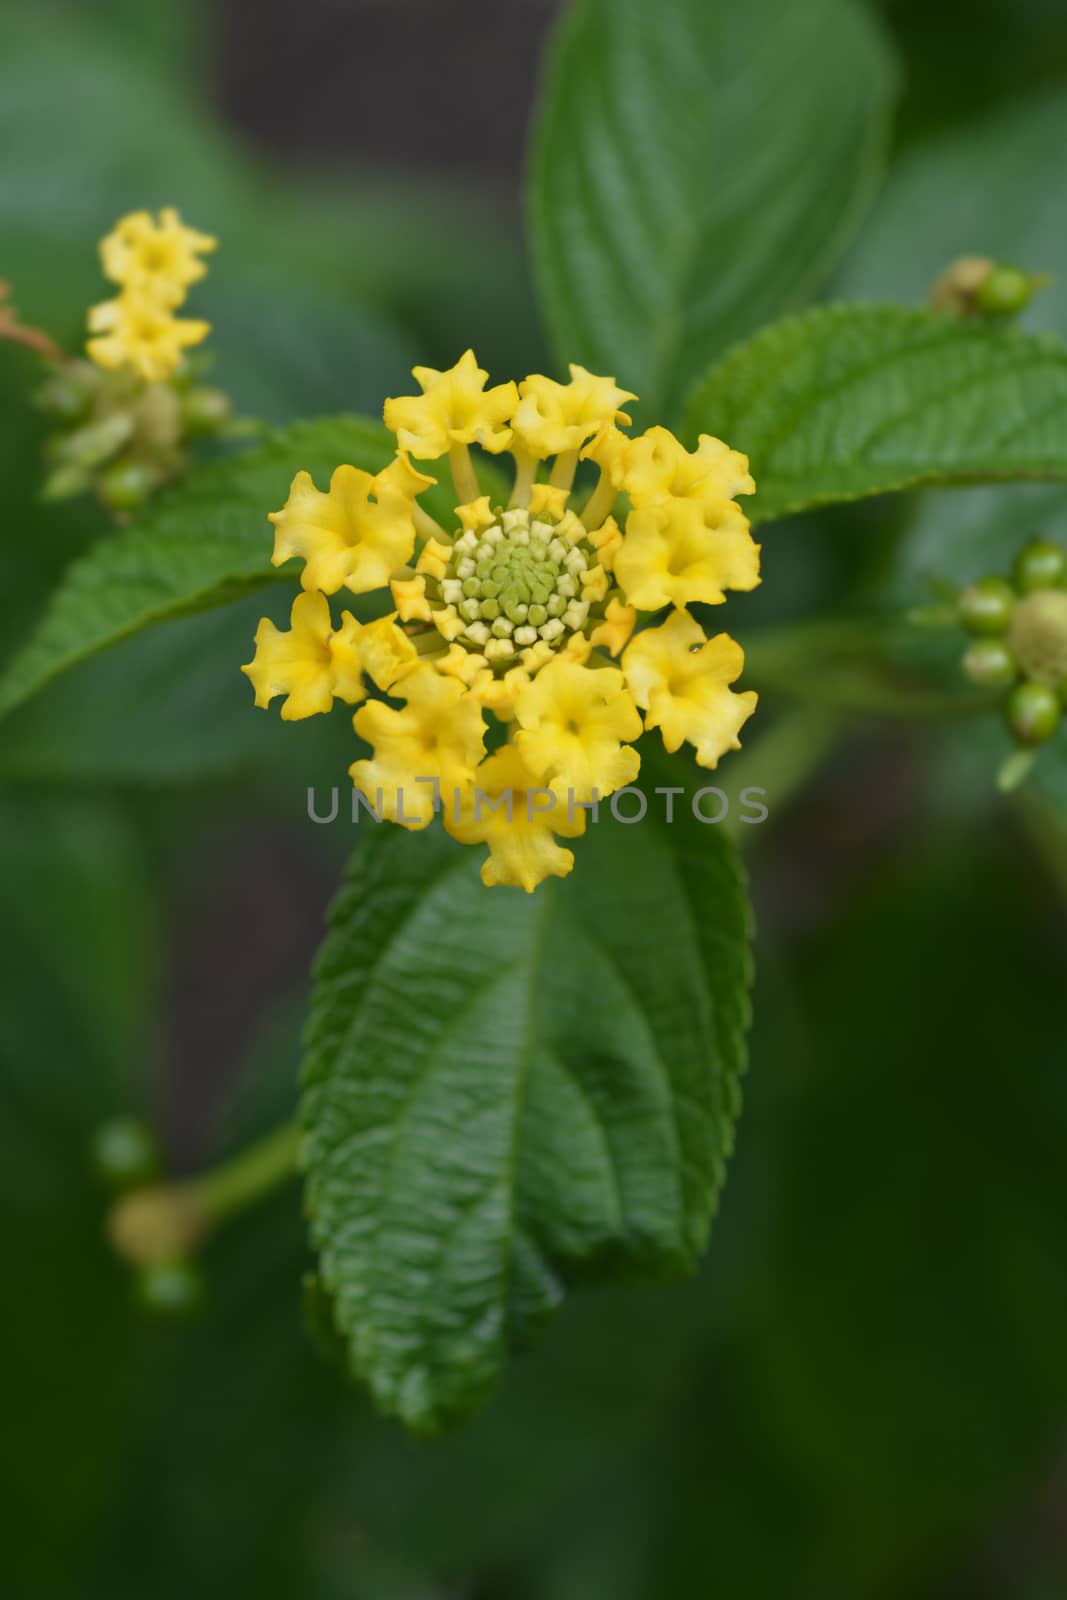 Shrub verbena yellow flower close up - Latin name - Lantana camara